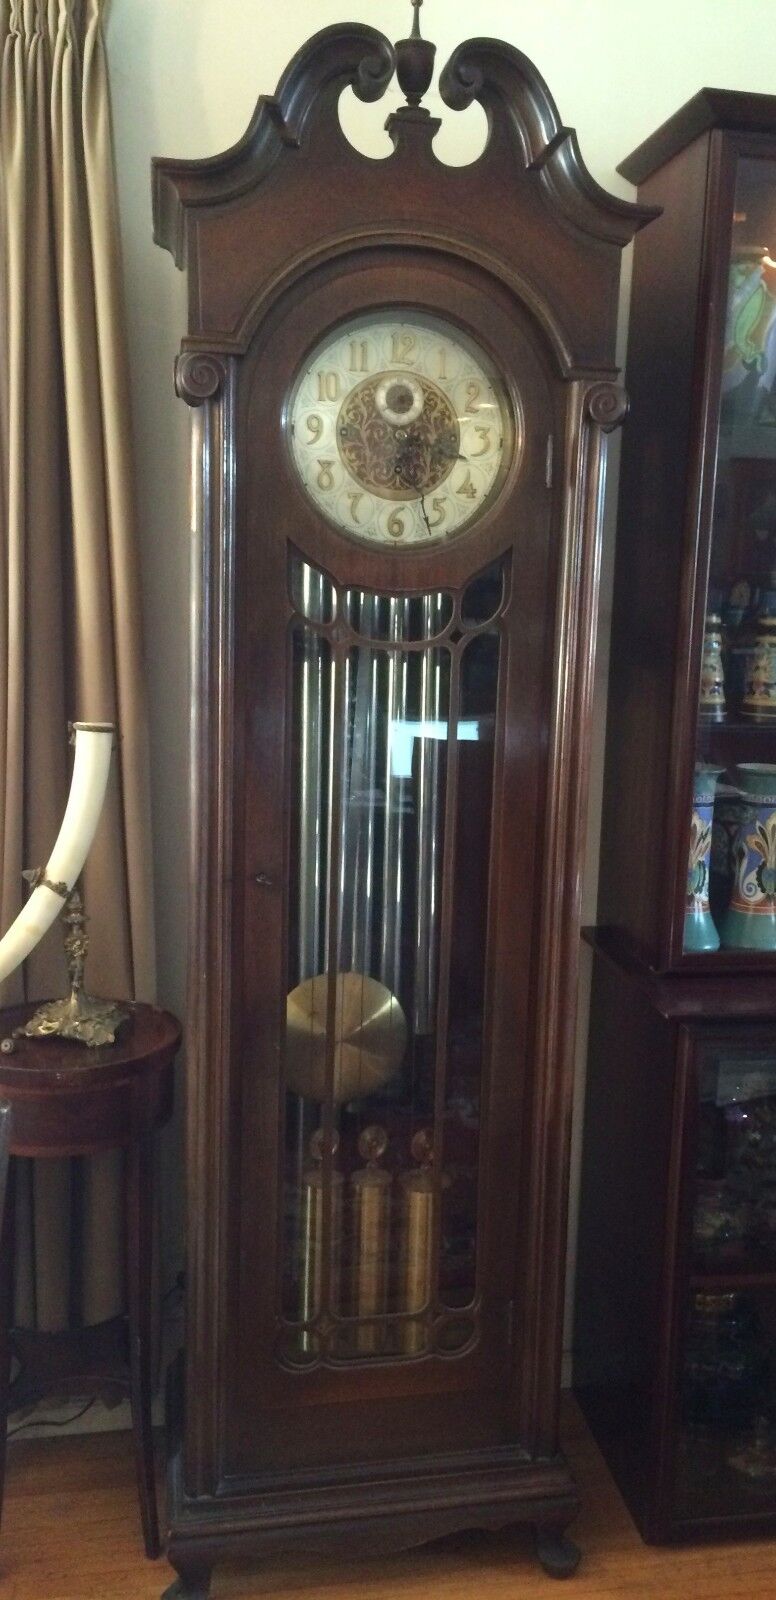 Antique Winterhalder & Hofmeier Grandfather Tall Floor Clock Westminster chimes